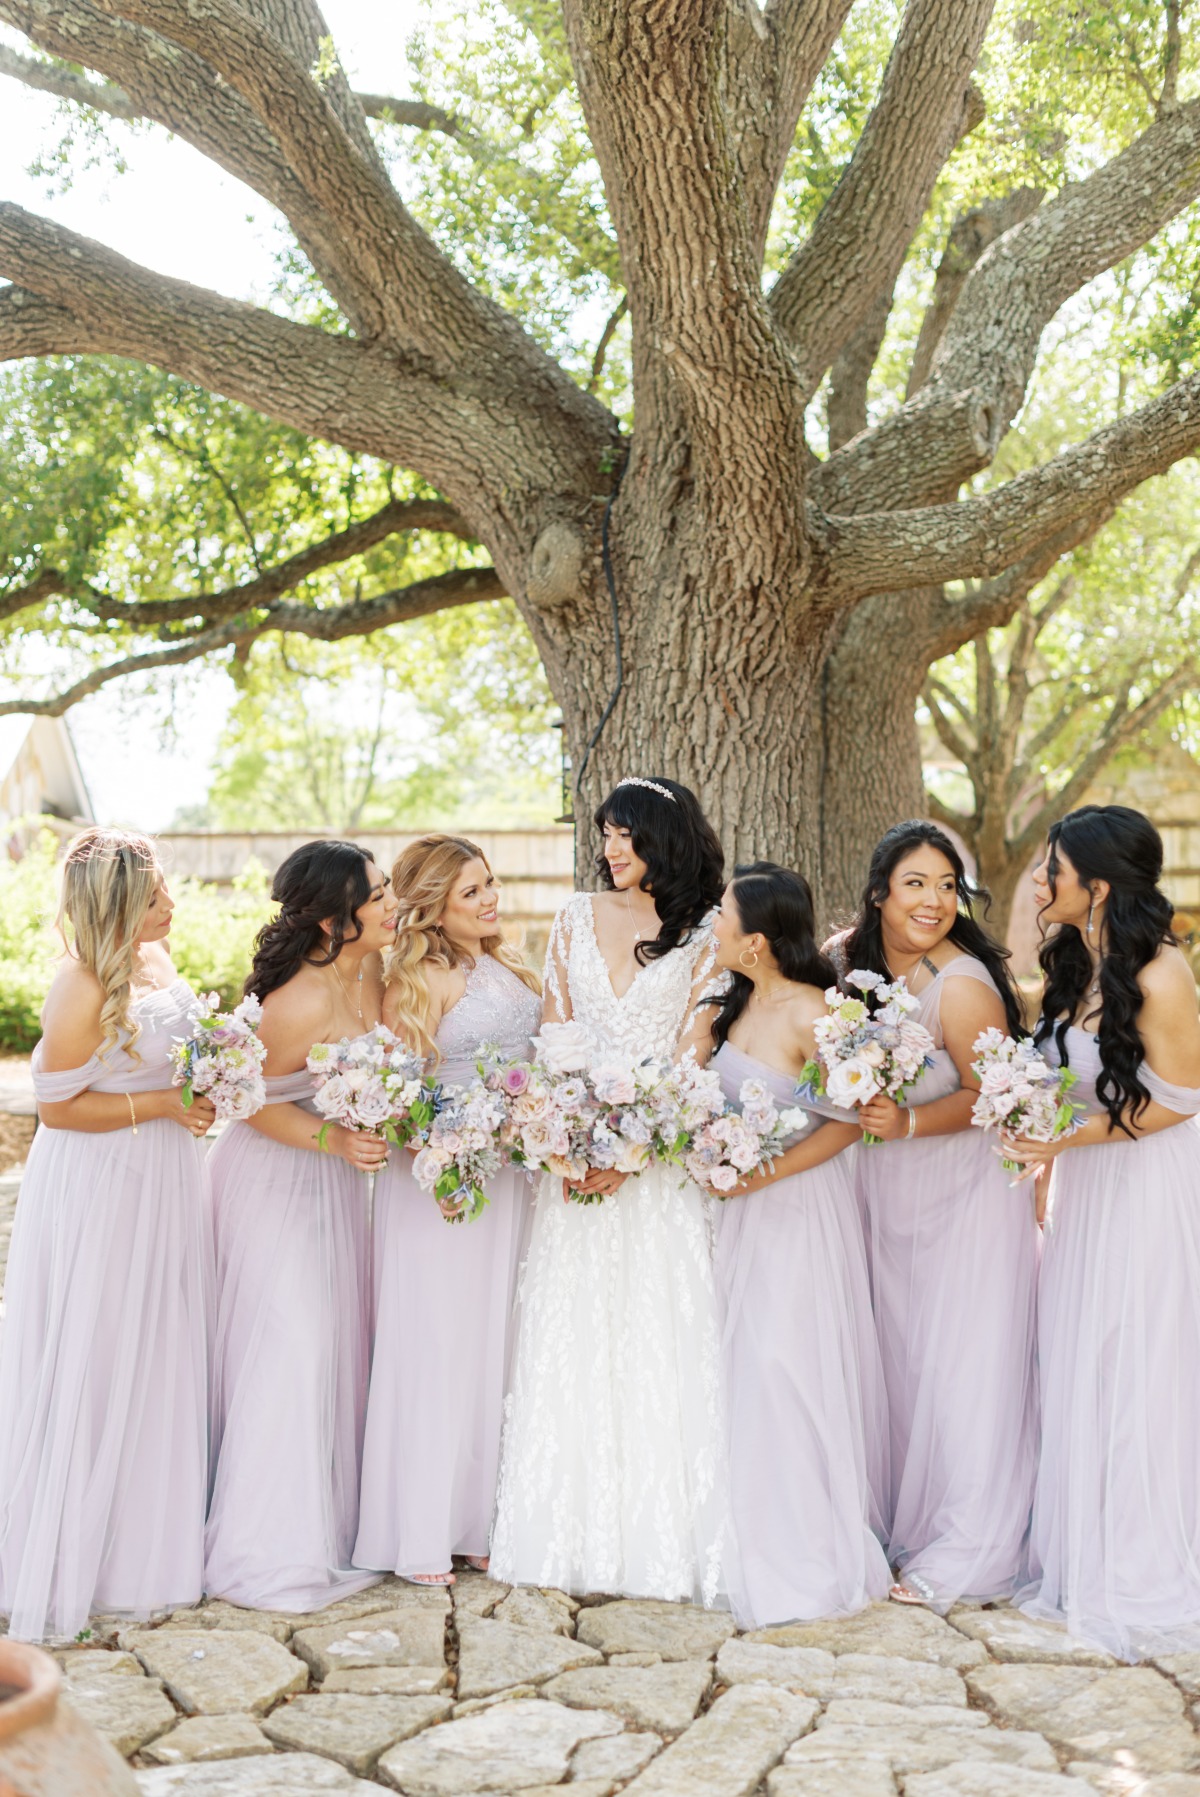 lavender bridesmaids dresses